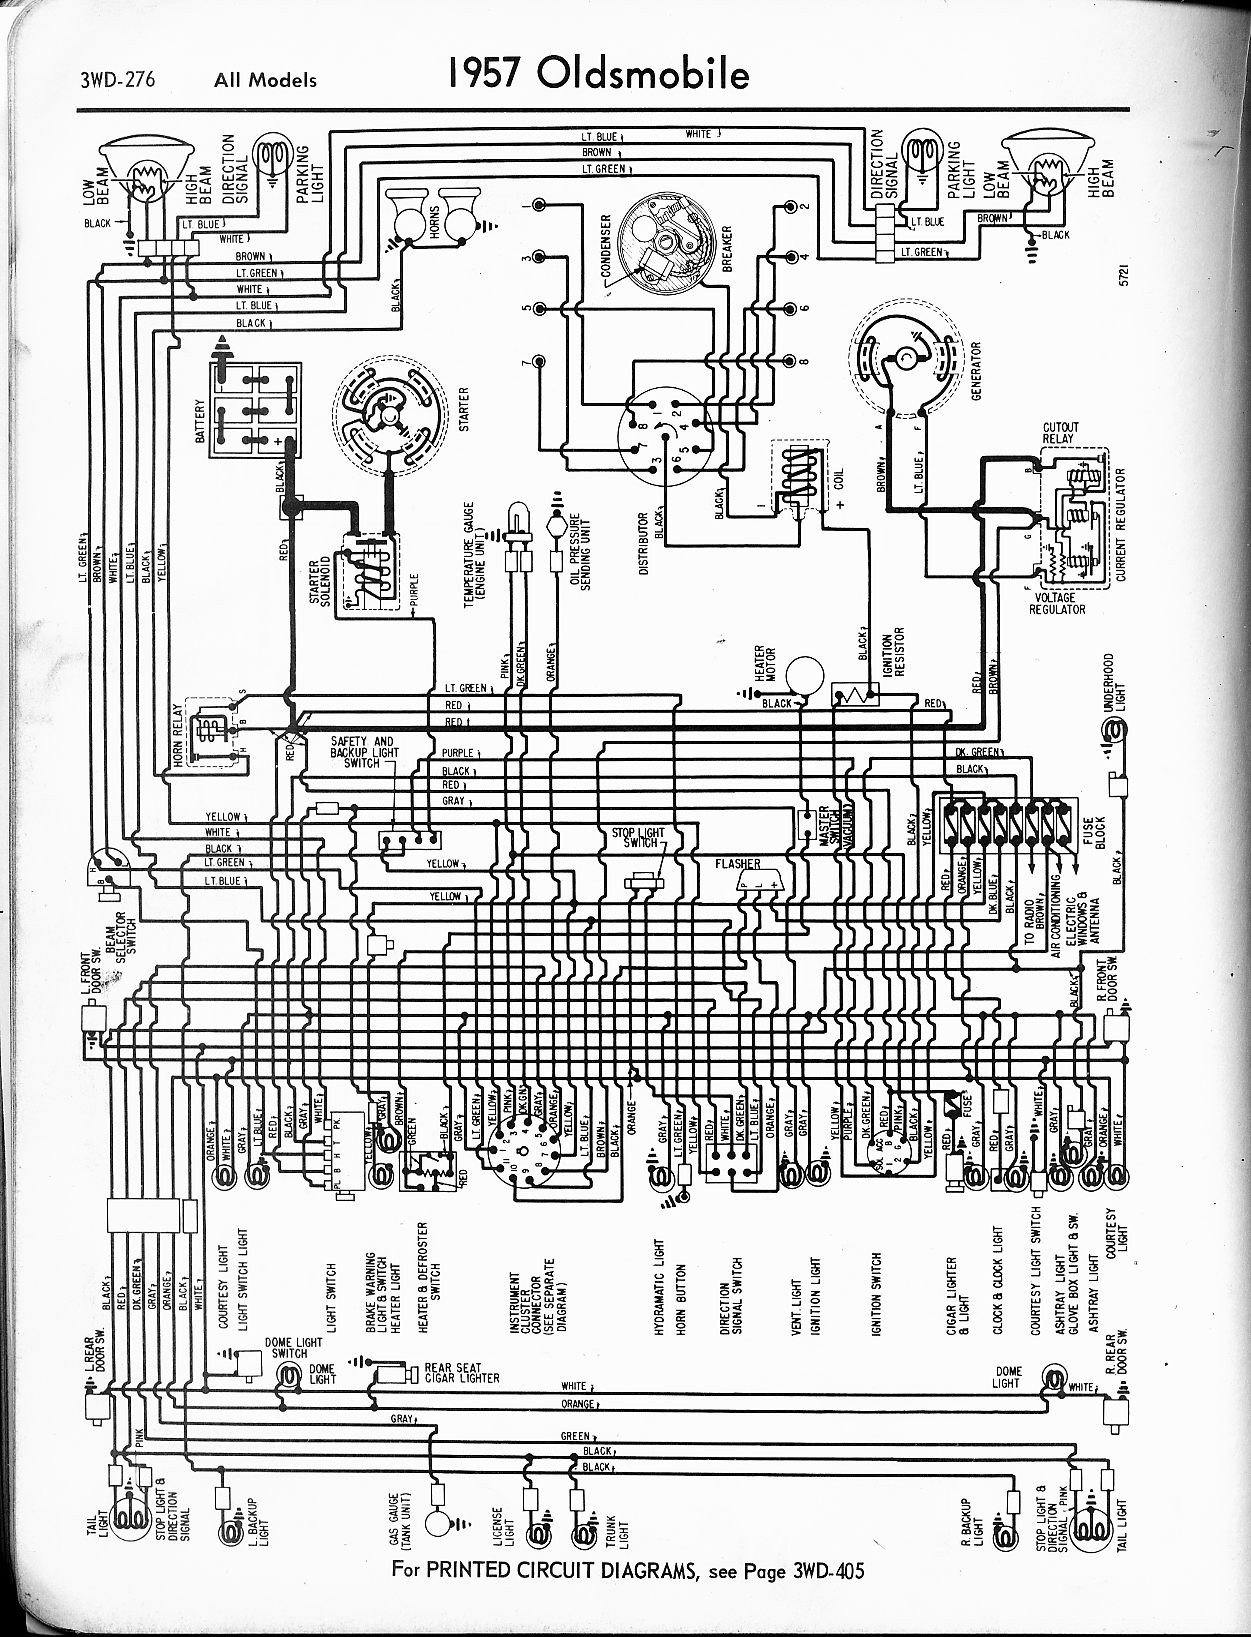 98 ford Taurus Engine Diagram Ninety Eight Wiring Diagram Get Free Image About Wiring Diagram Of 98 ford Taurus Engine Diagram